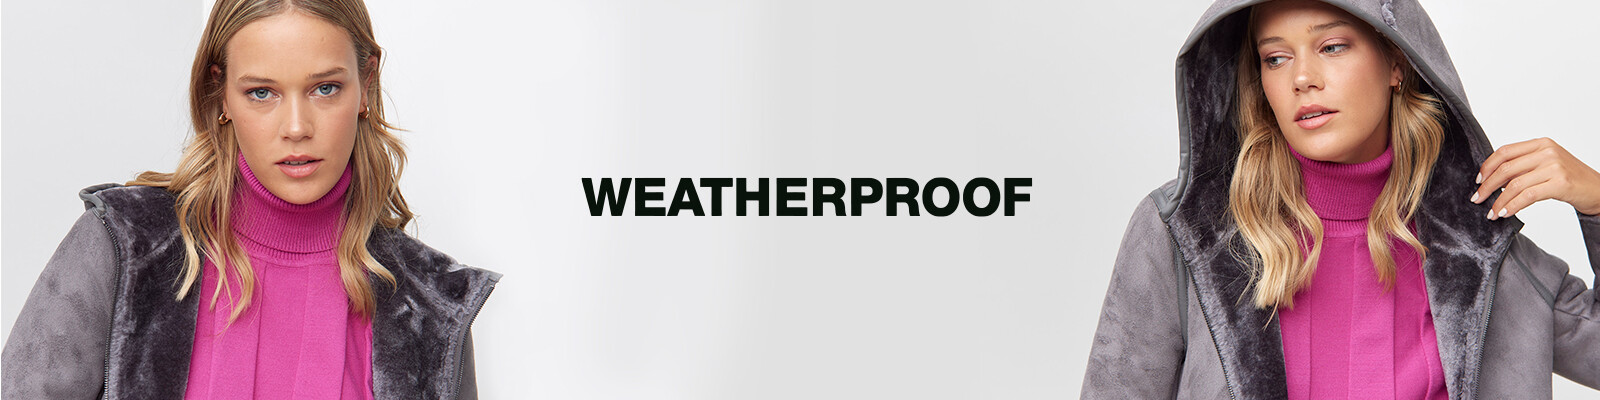 Weatherproof